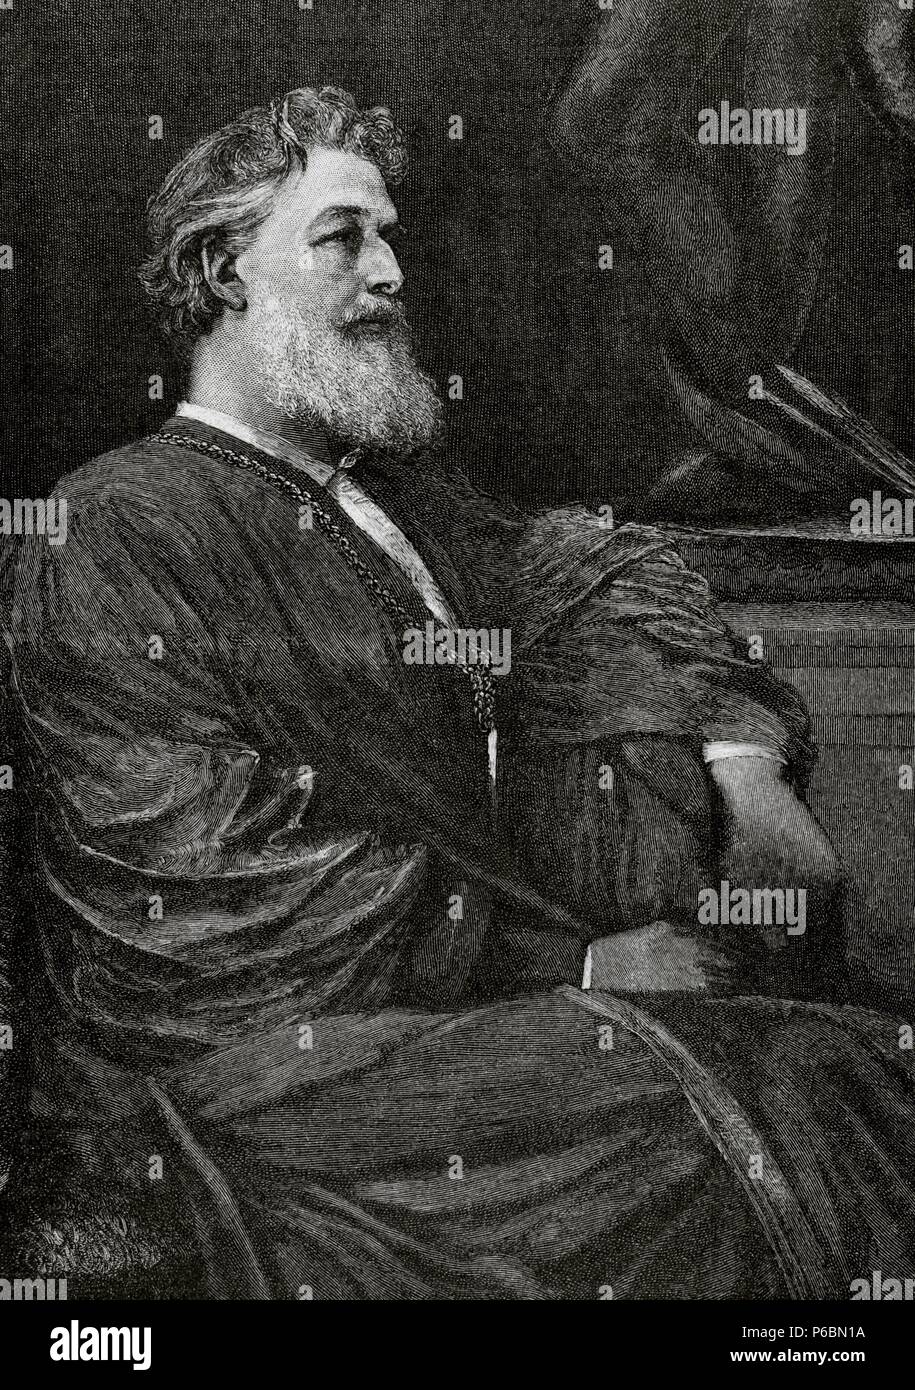 Frederic Leighton, 1st Baron Leighton (1830 Ð 1896), known as Sir Frederic Leighton between 1878 and 1896. English painter and sculptor. Engraving 'La Ilustracion Iberica', 1888. Stock Photo